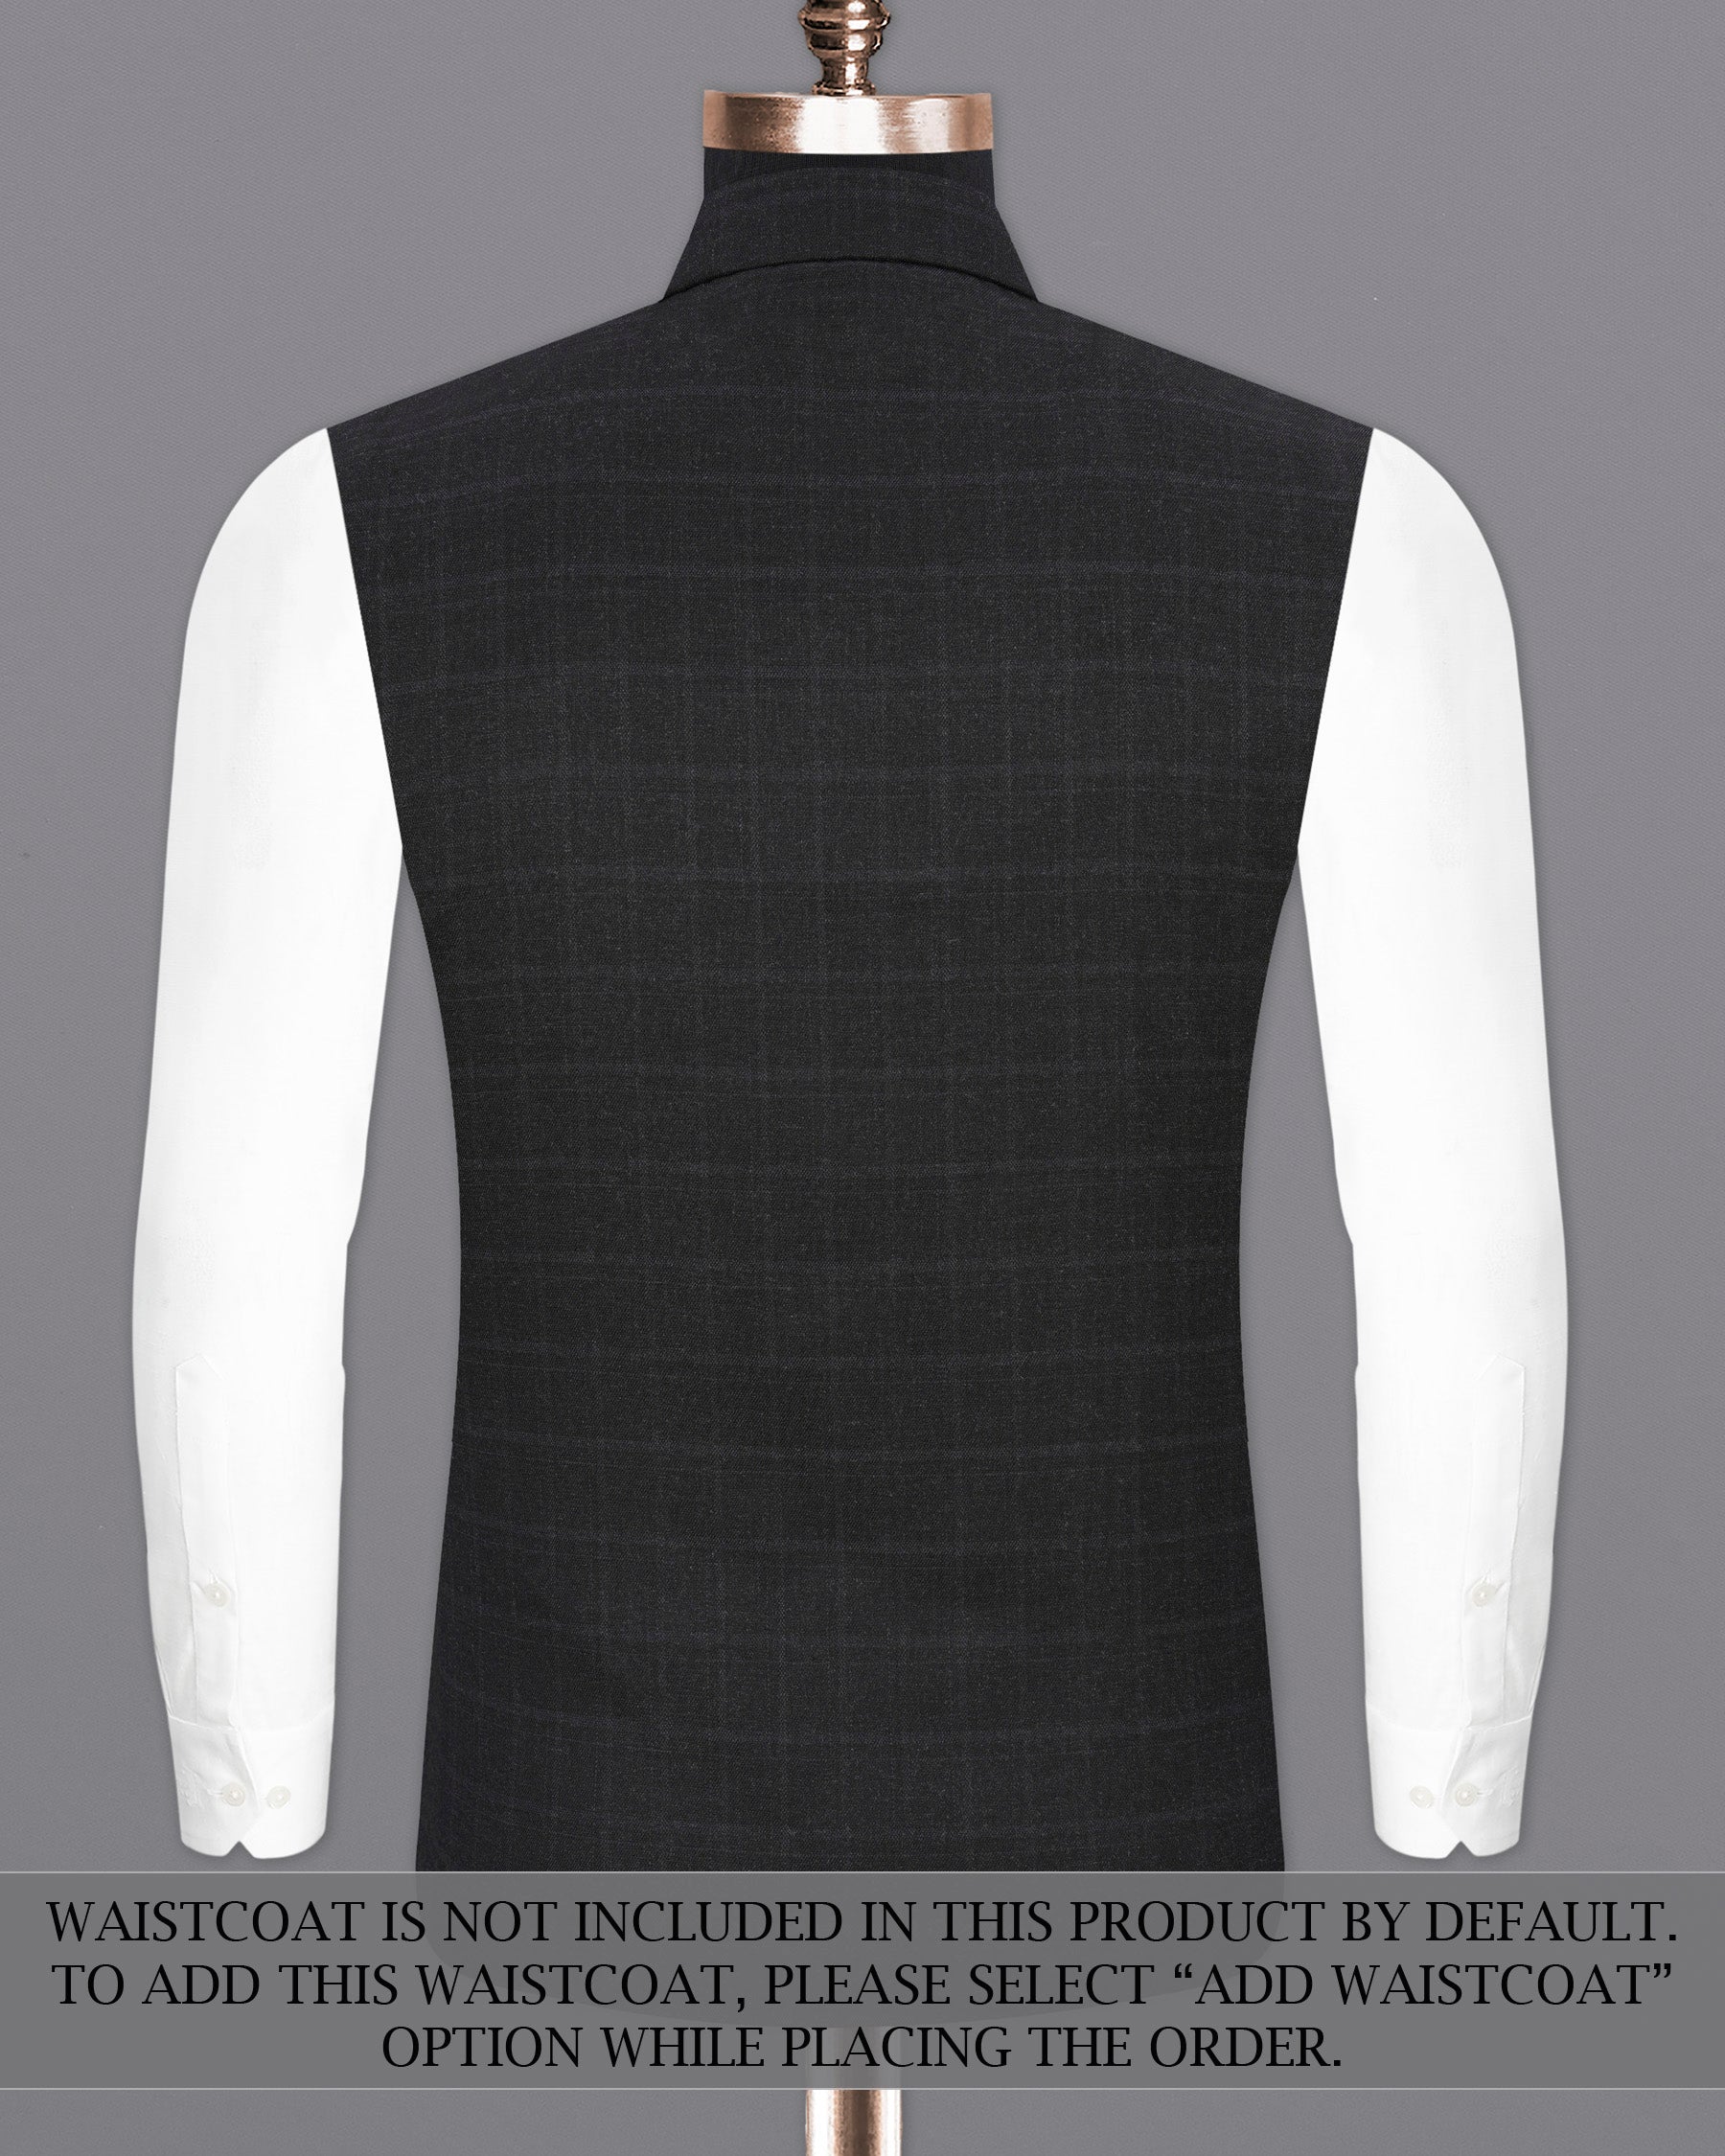 Shark Gray Plaid Cross Placket Bandhgala Suit